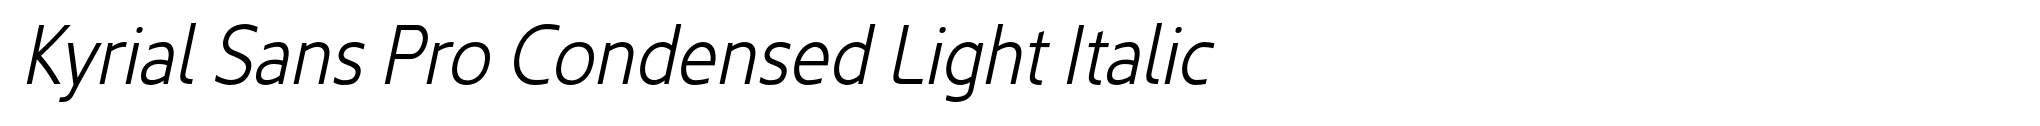 Kyrial Sans Pro Condensed Light Italic image